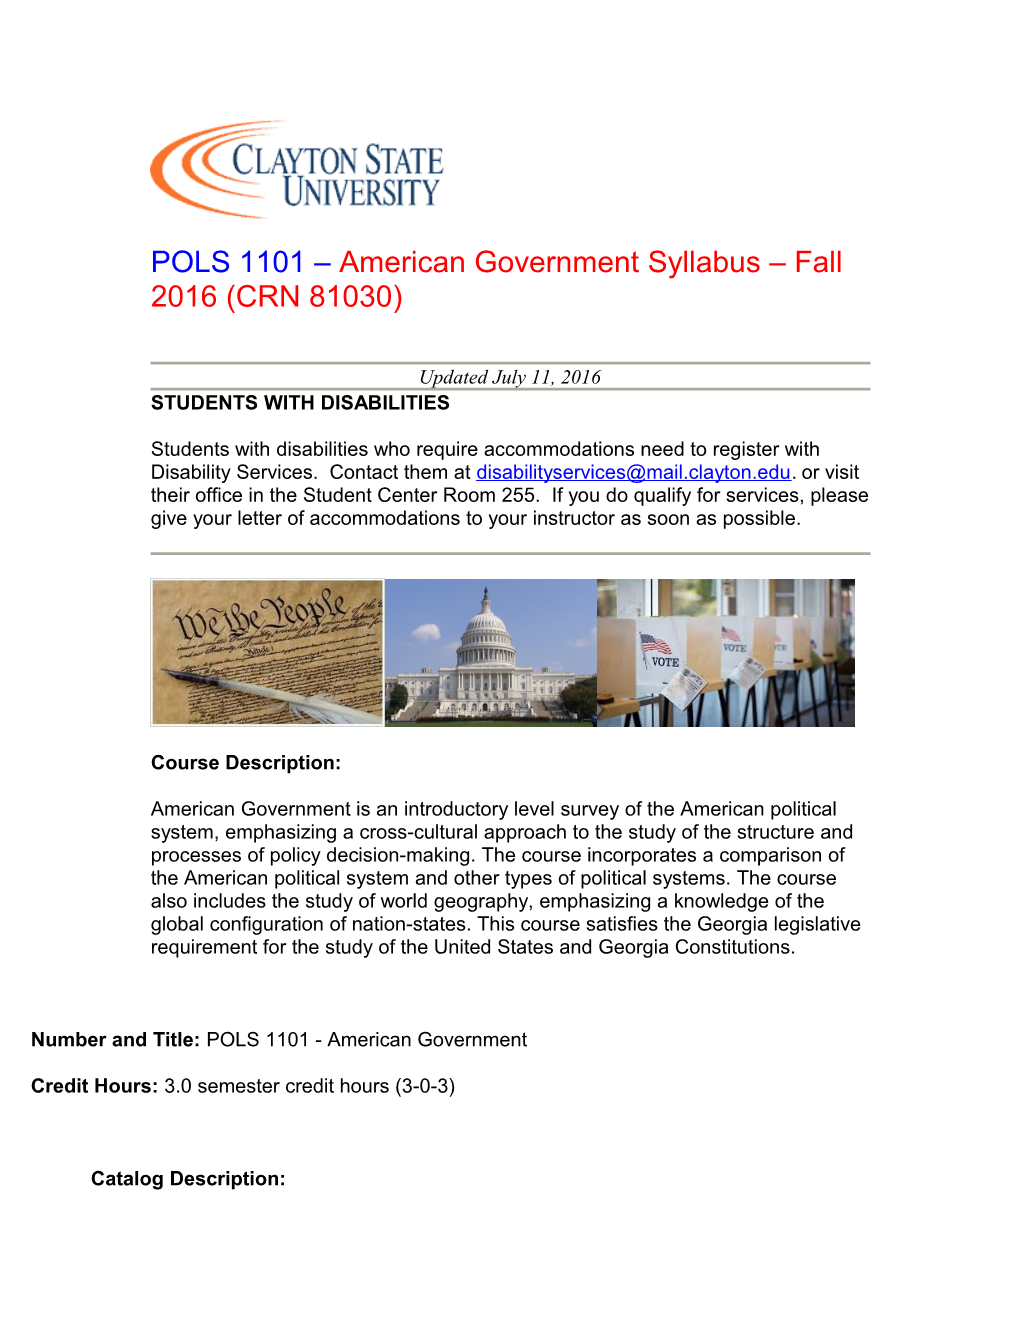 POLS 1101 American Government Syllabus Fall 2016 (CRN 81030)